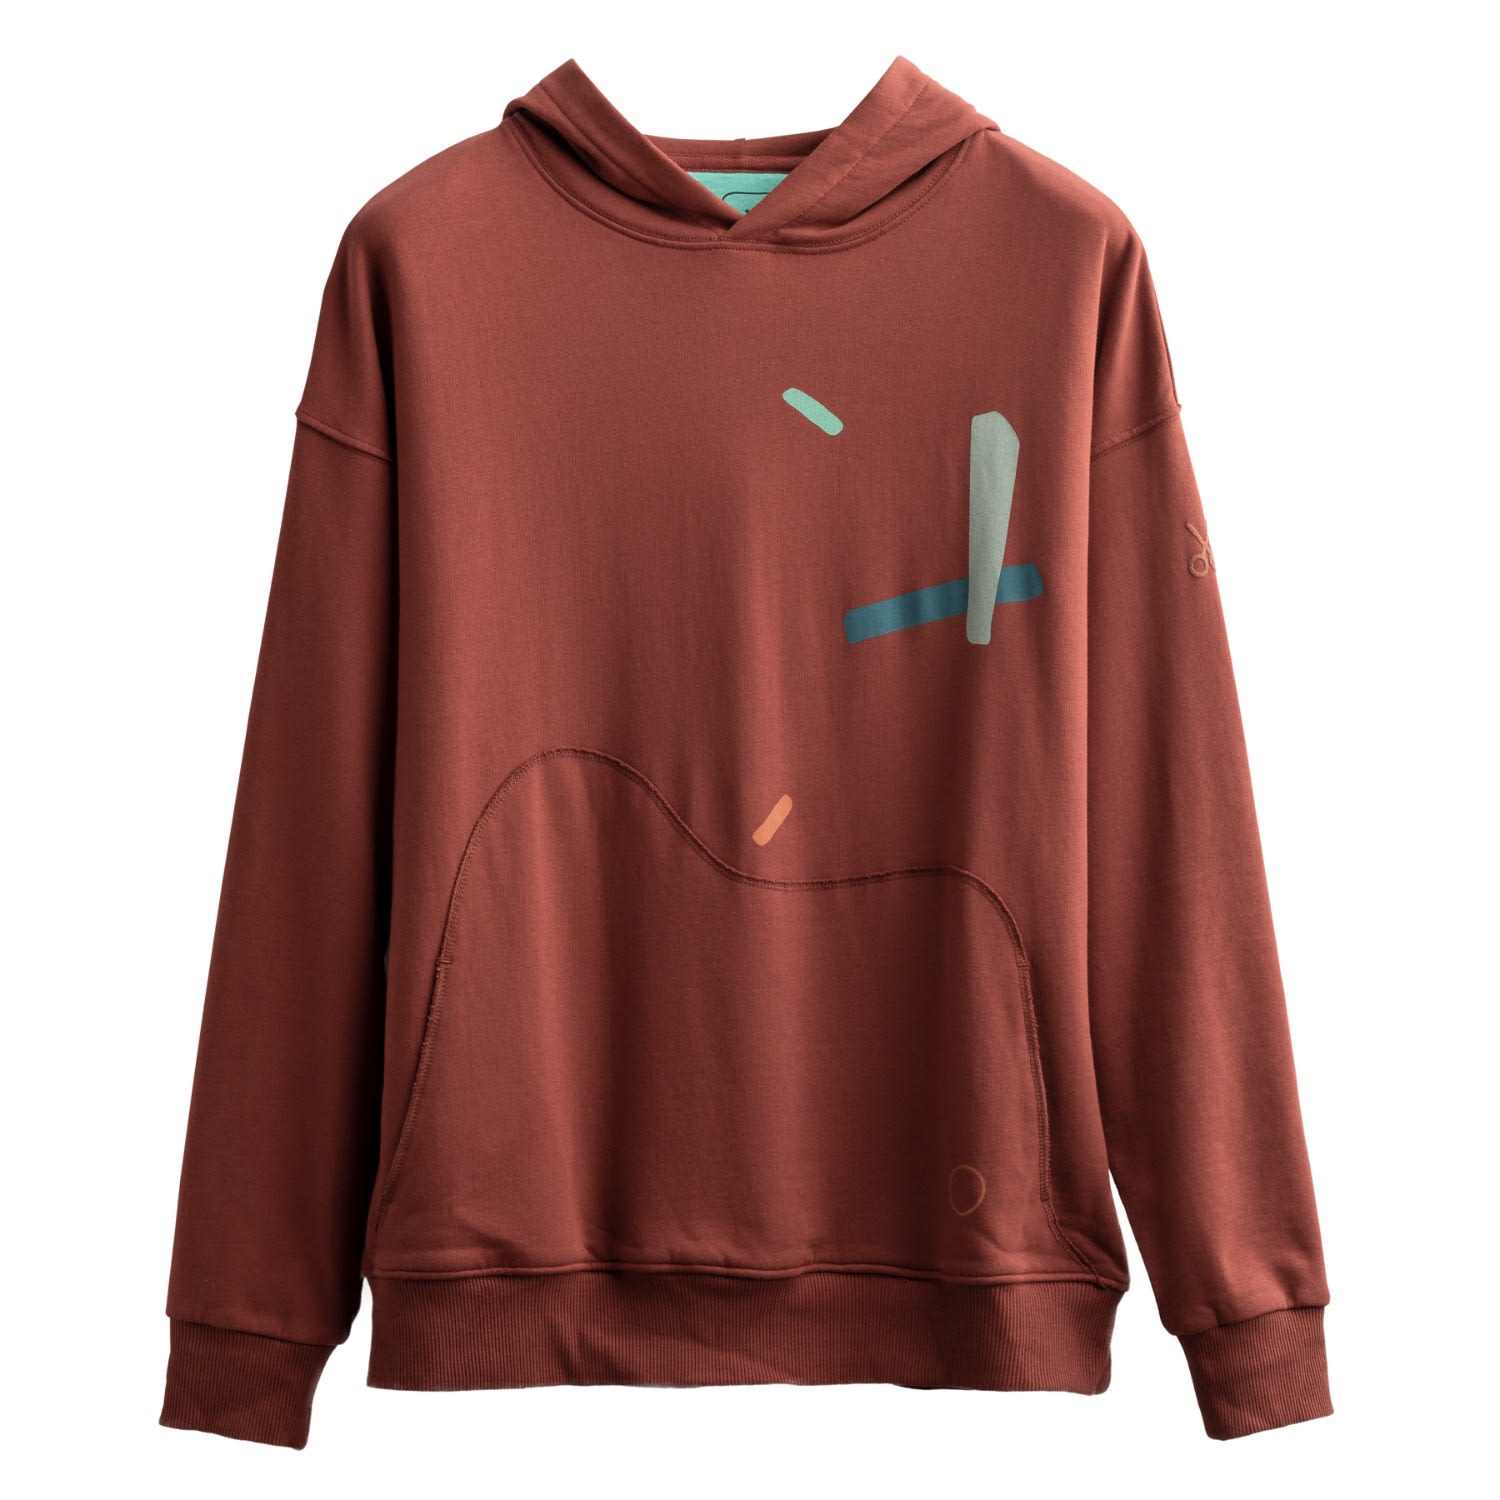 Men's Red Unisex Design Hoodie Sweatshirt - Apenda - Brick Small KAFT